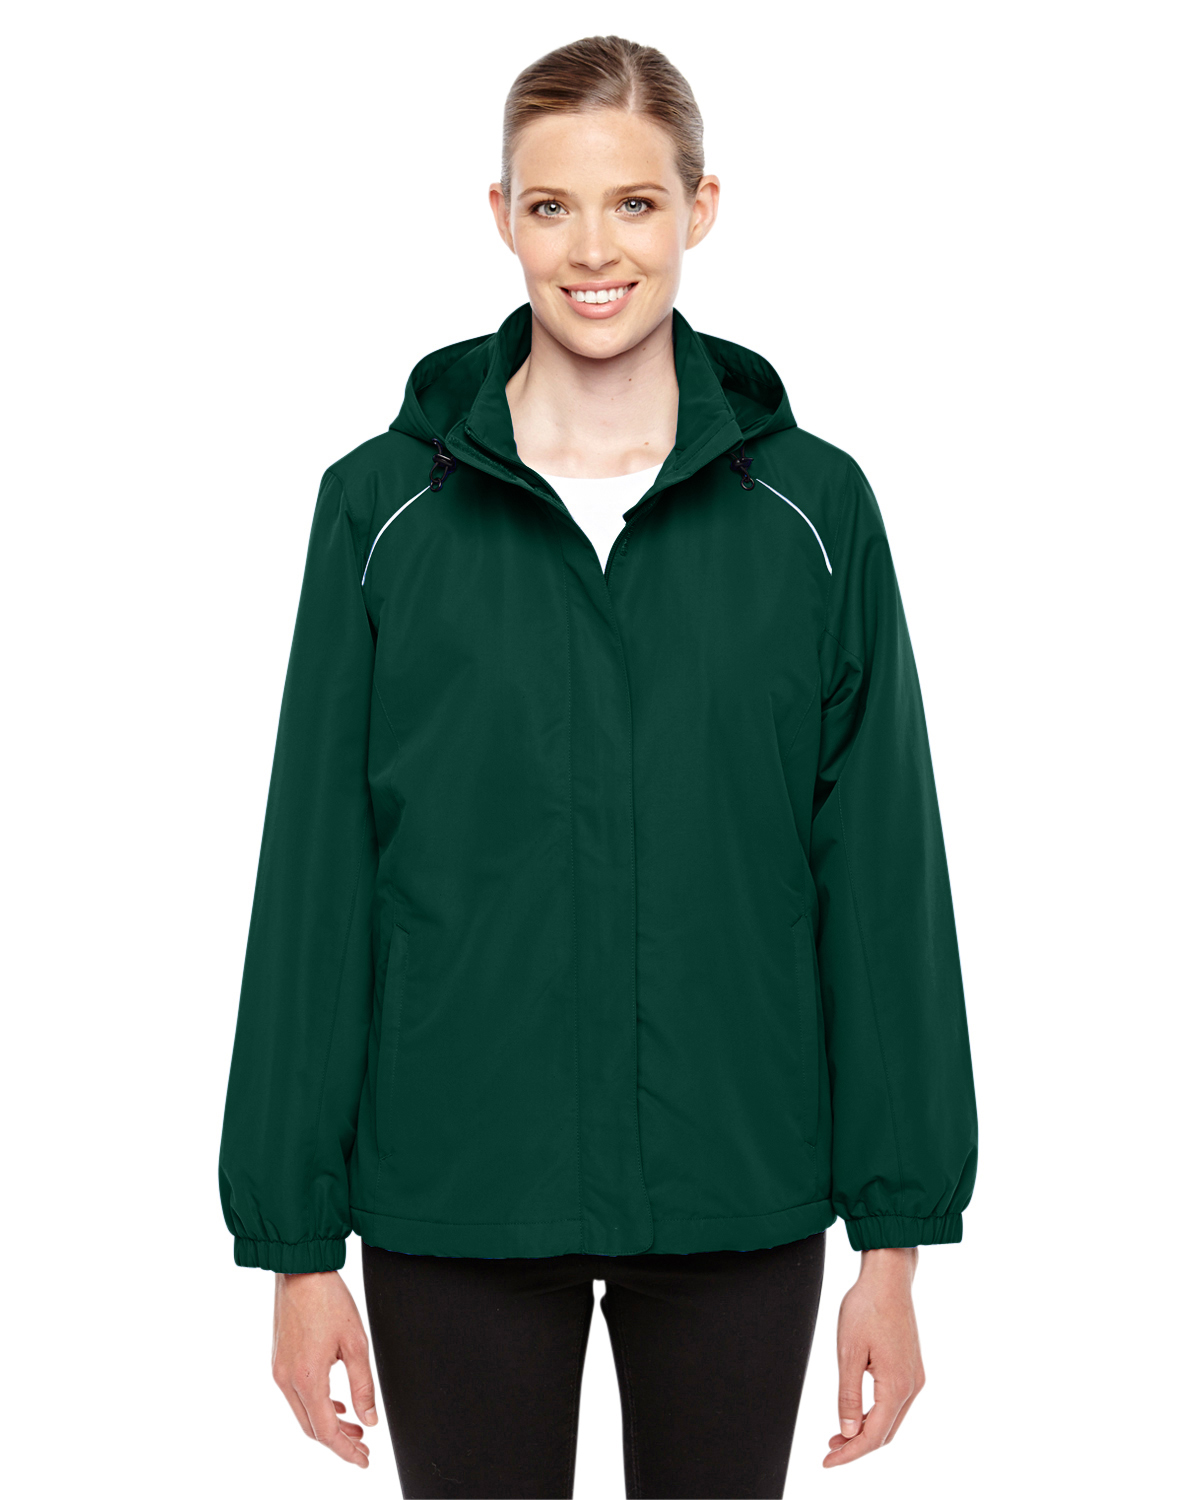 Core 365 78224 - Ladies' Profile Fleece-Lined All-Season Jacket